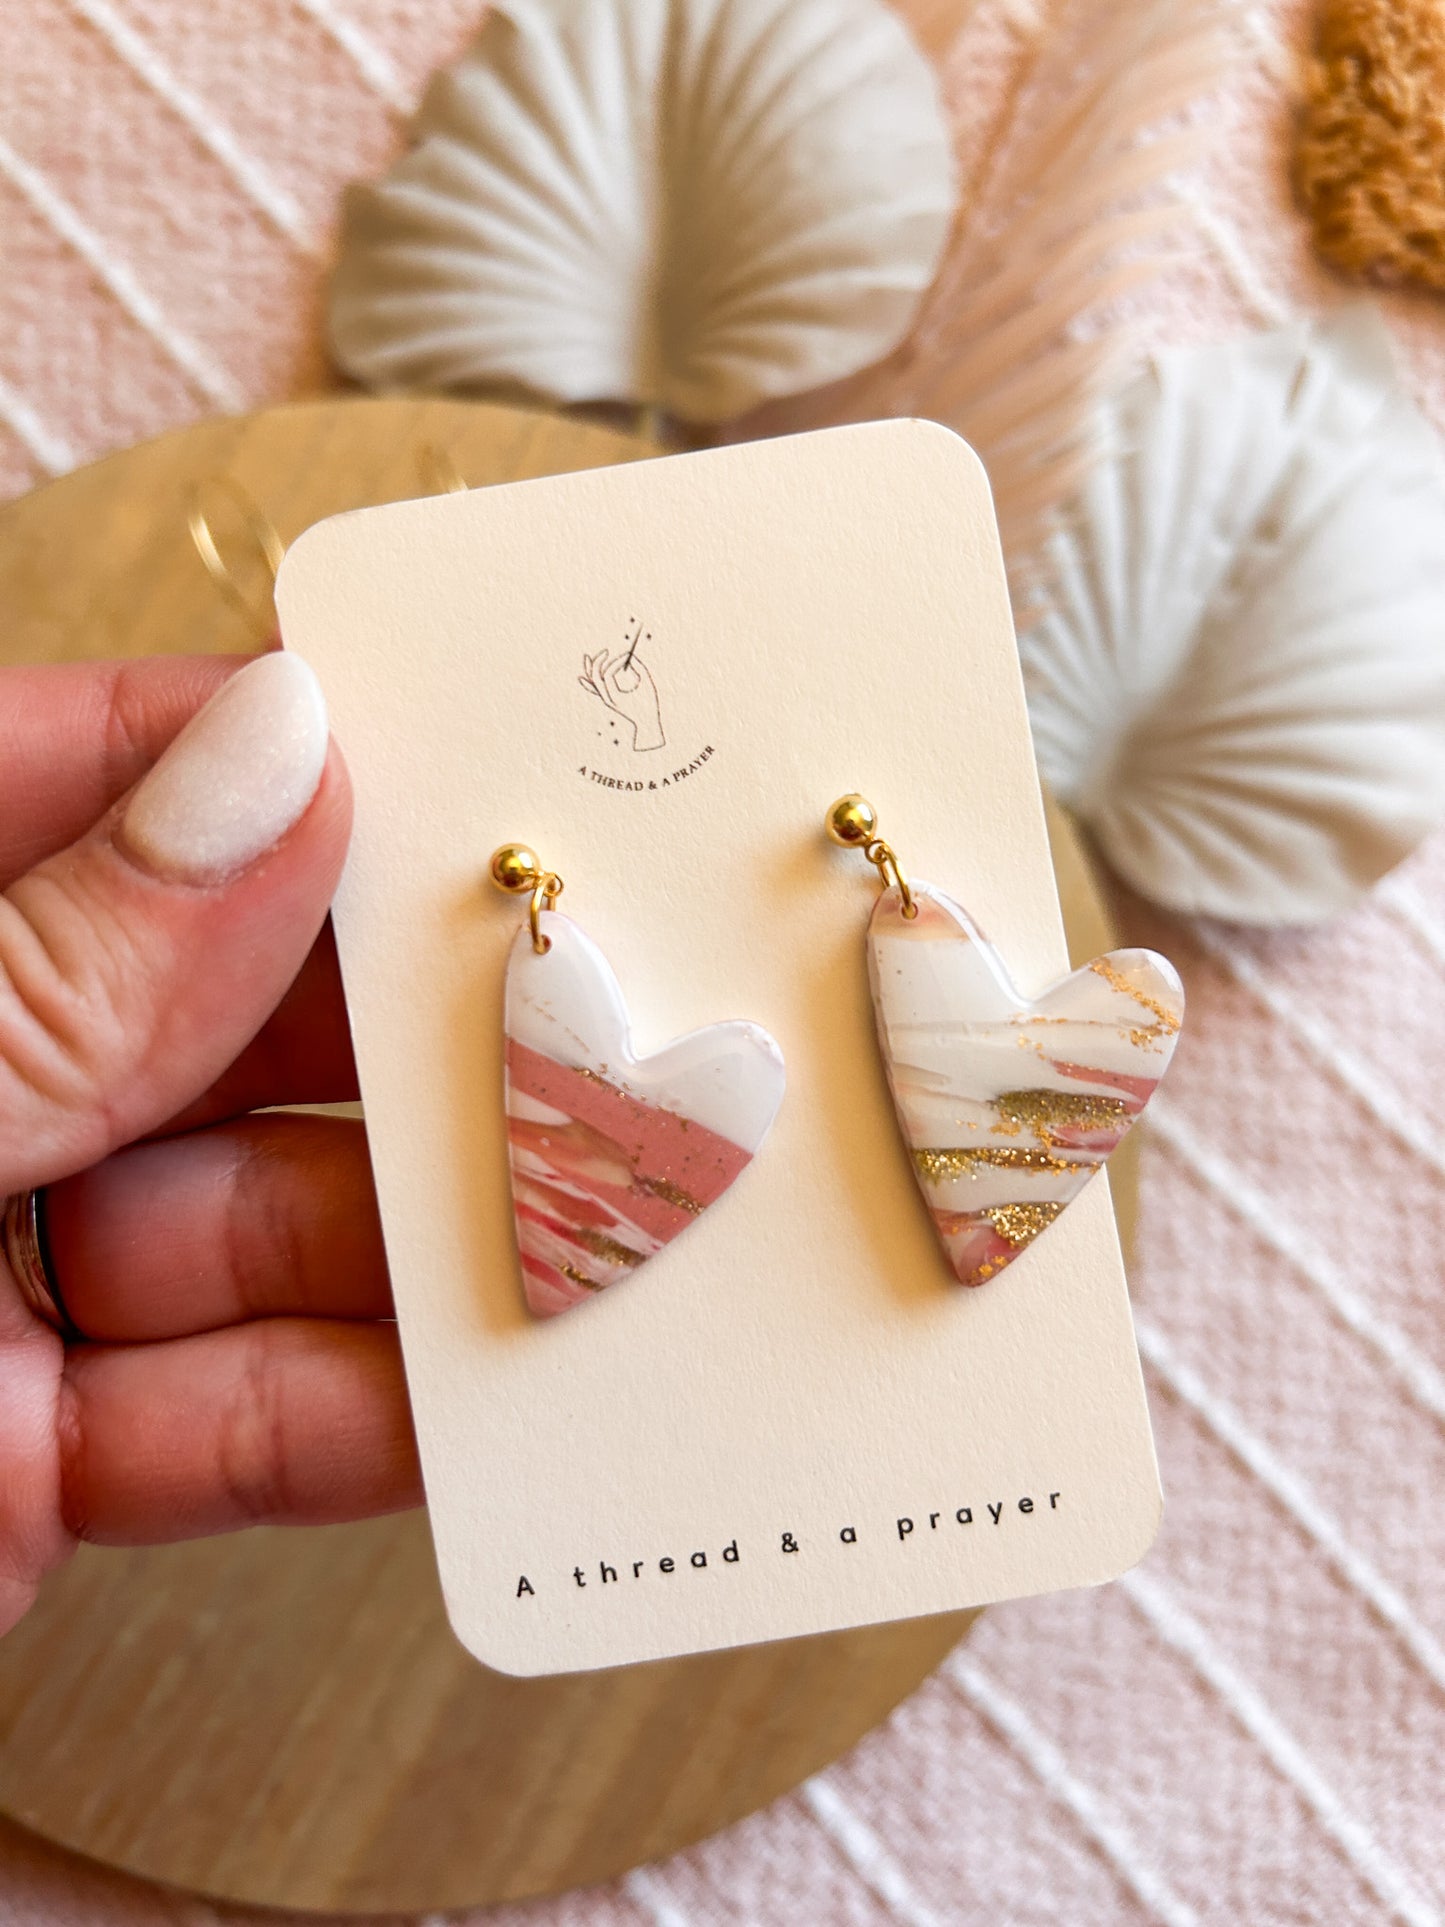 Heart Breaker Marble Clay Earrings | Pink and White Earrings | Valentine's Day Earrings | Clay Earrings  | Lightweight  hi